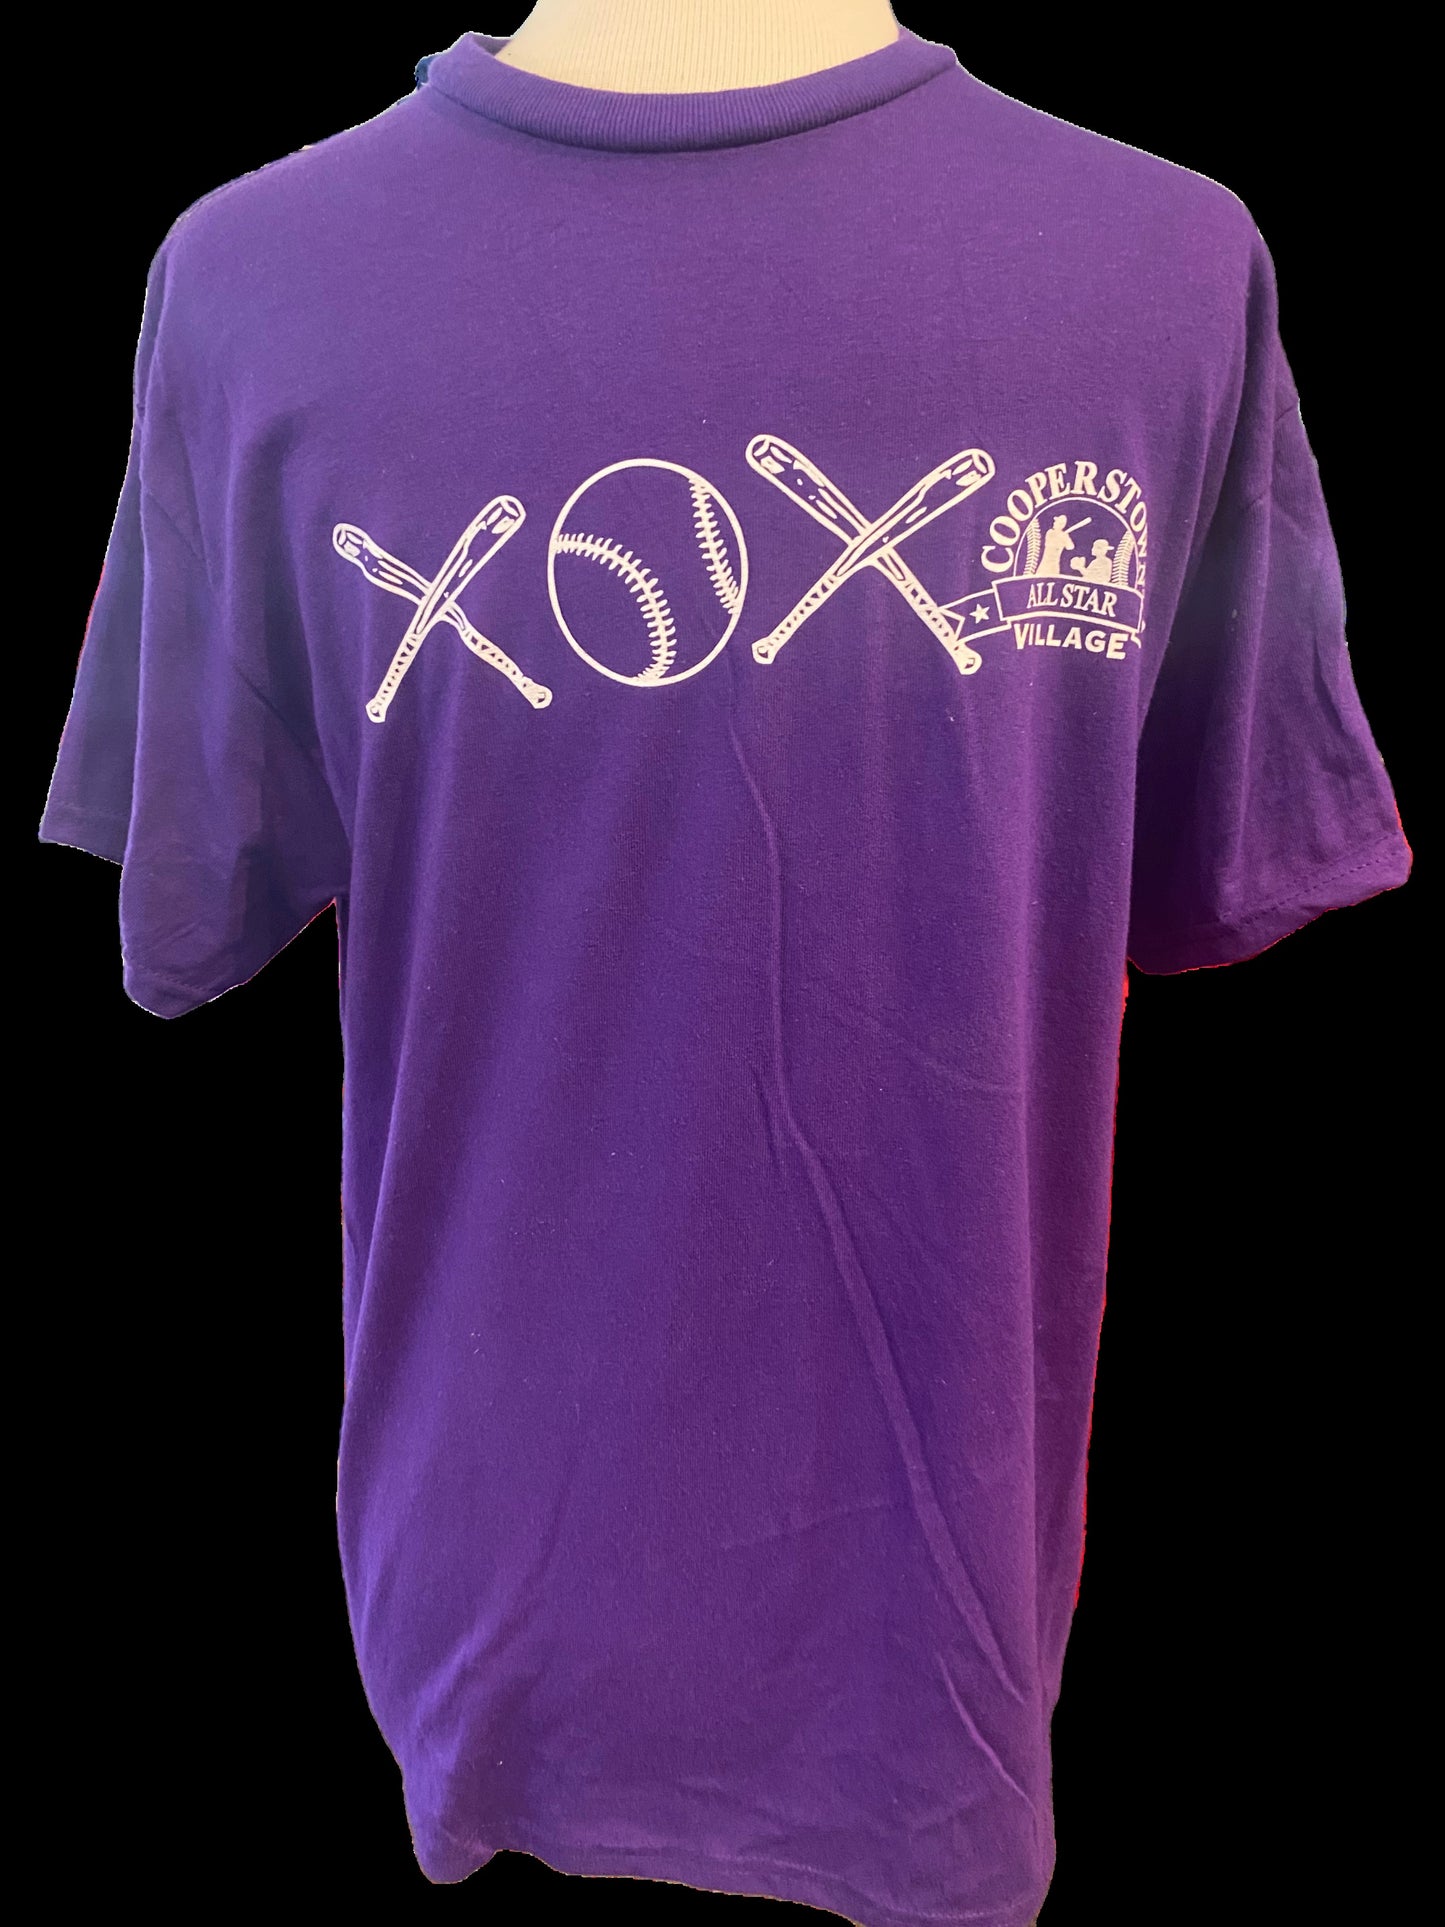 XOXO Cooperstown All Star Village  T-Shirt